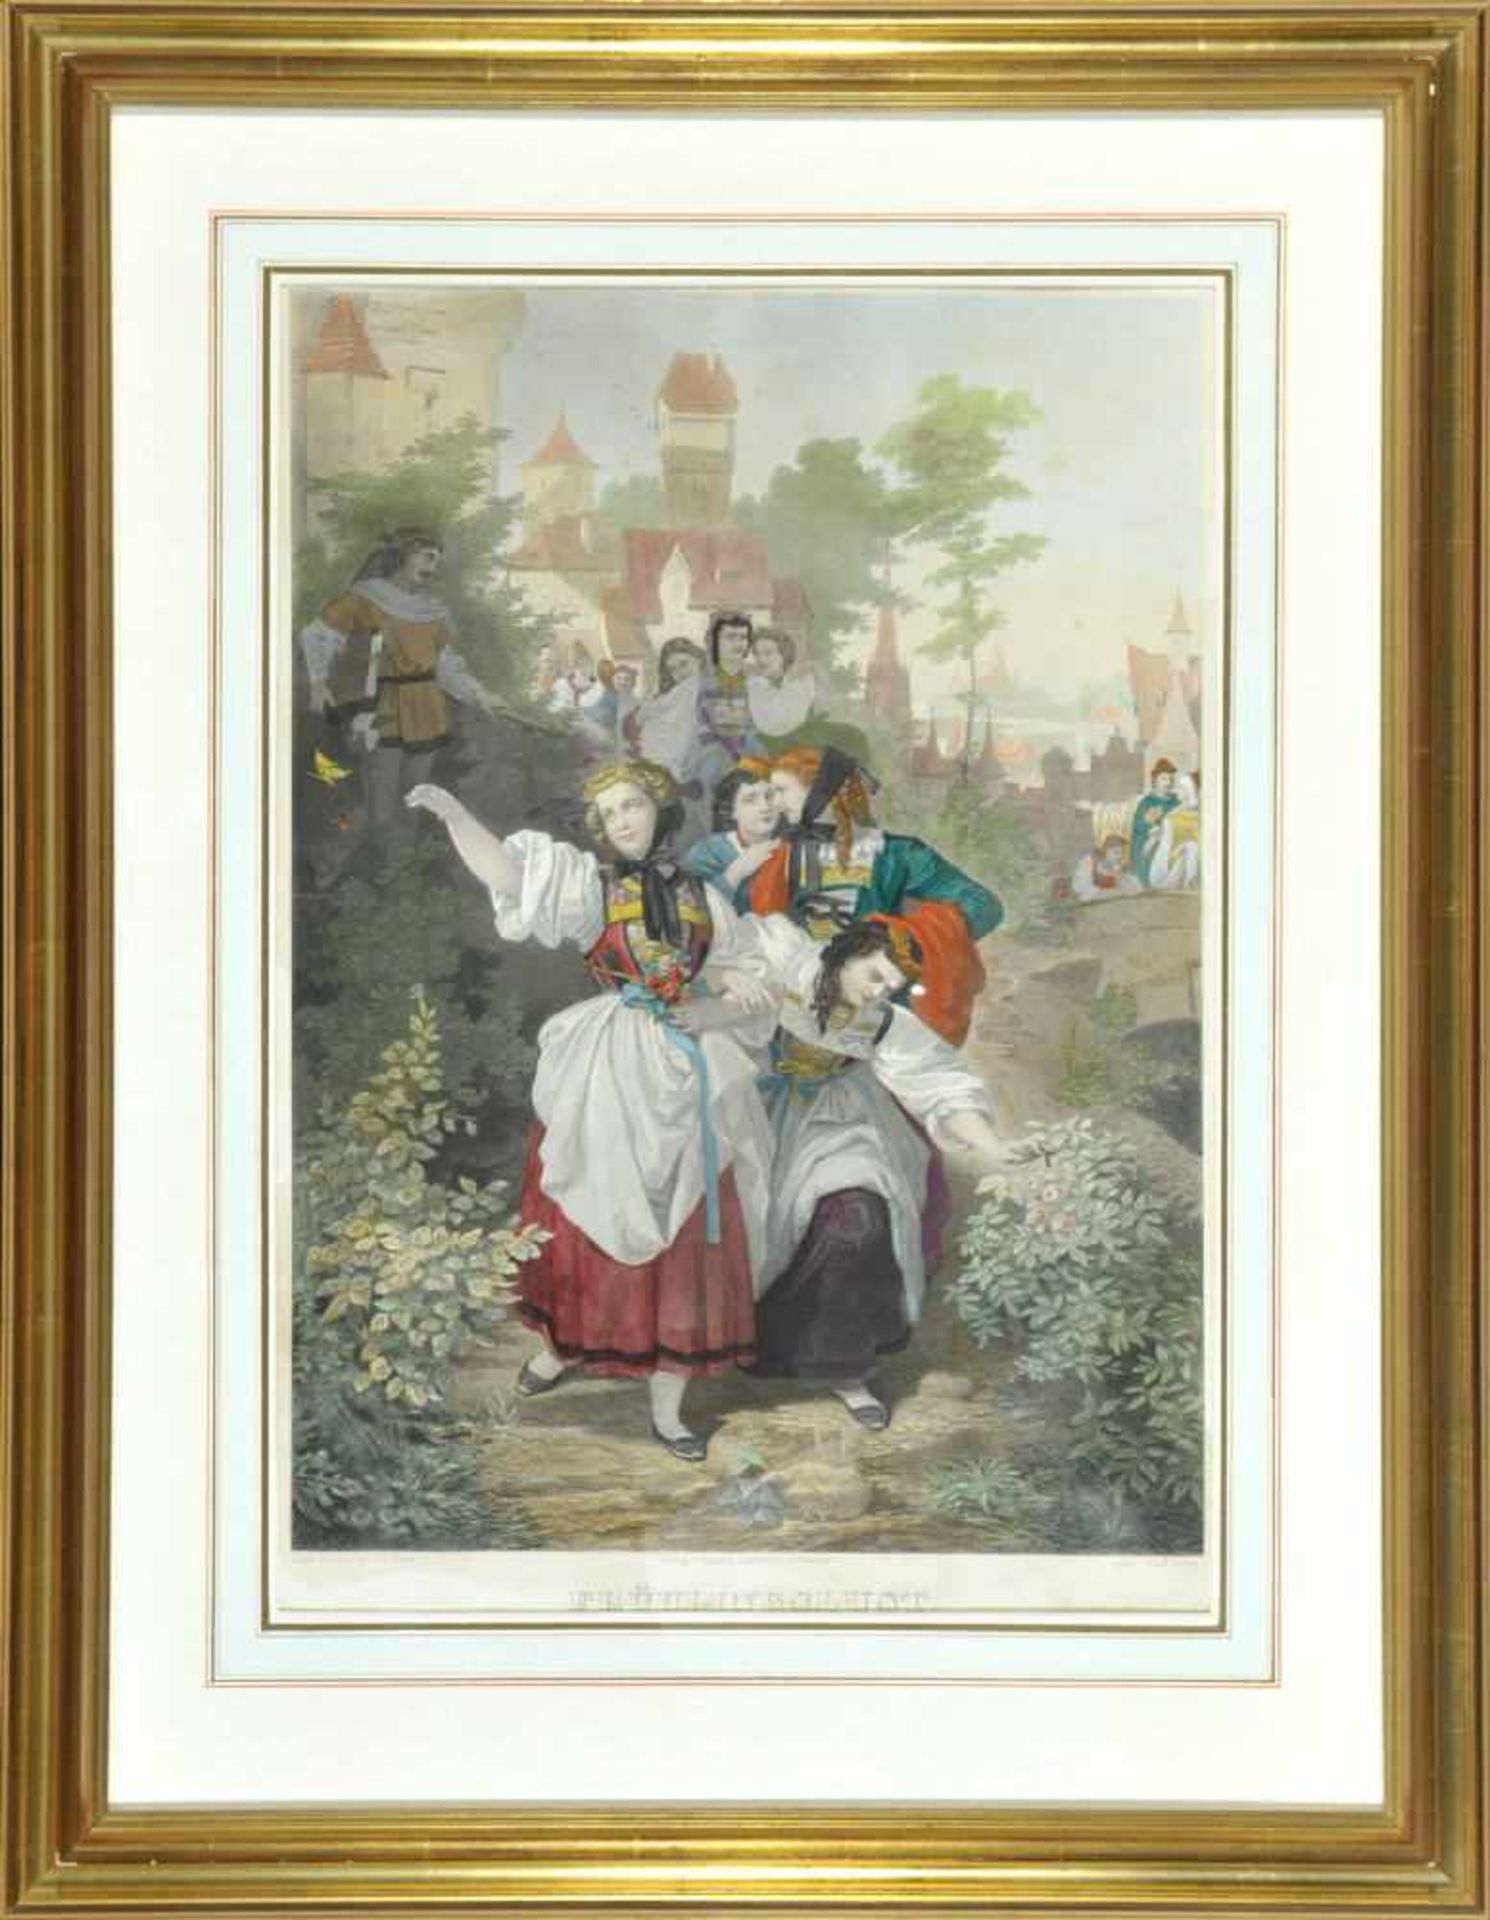 Lithographie, 19. Jh.handcolor., 50 x 36 cm, betit. " Frühlingslust ", von C. Geyer, R